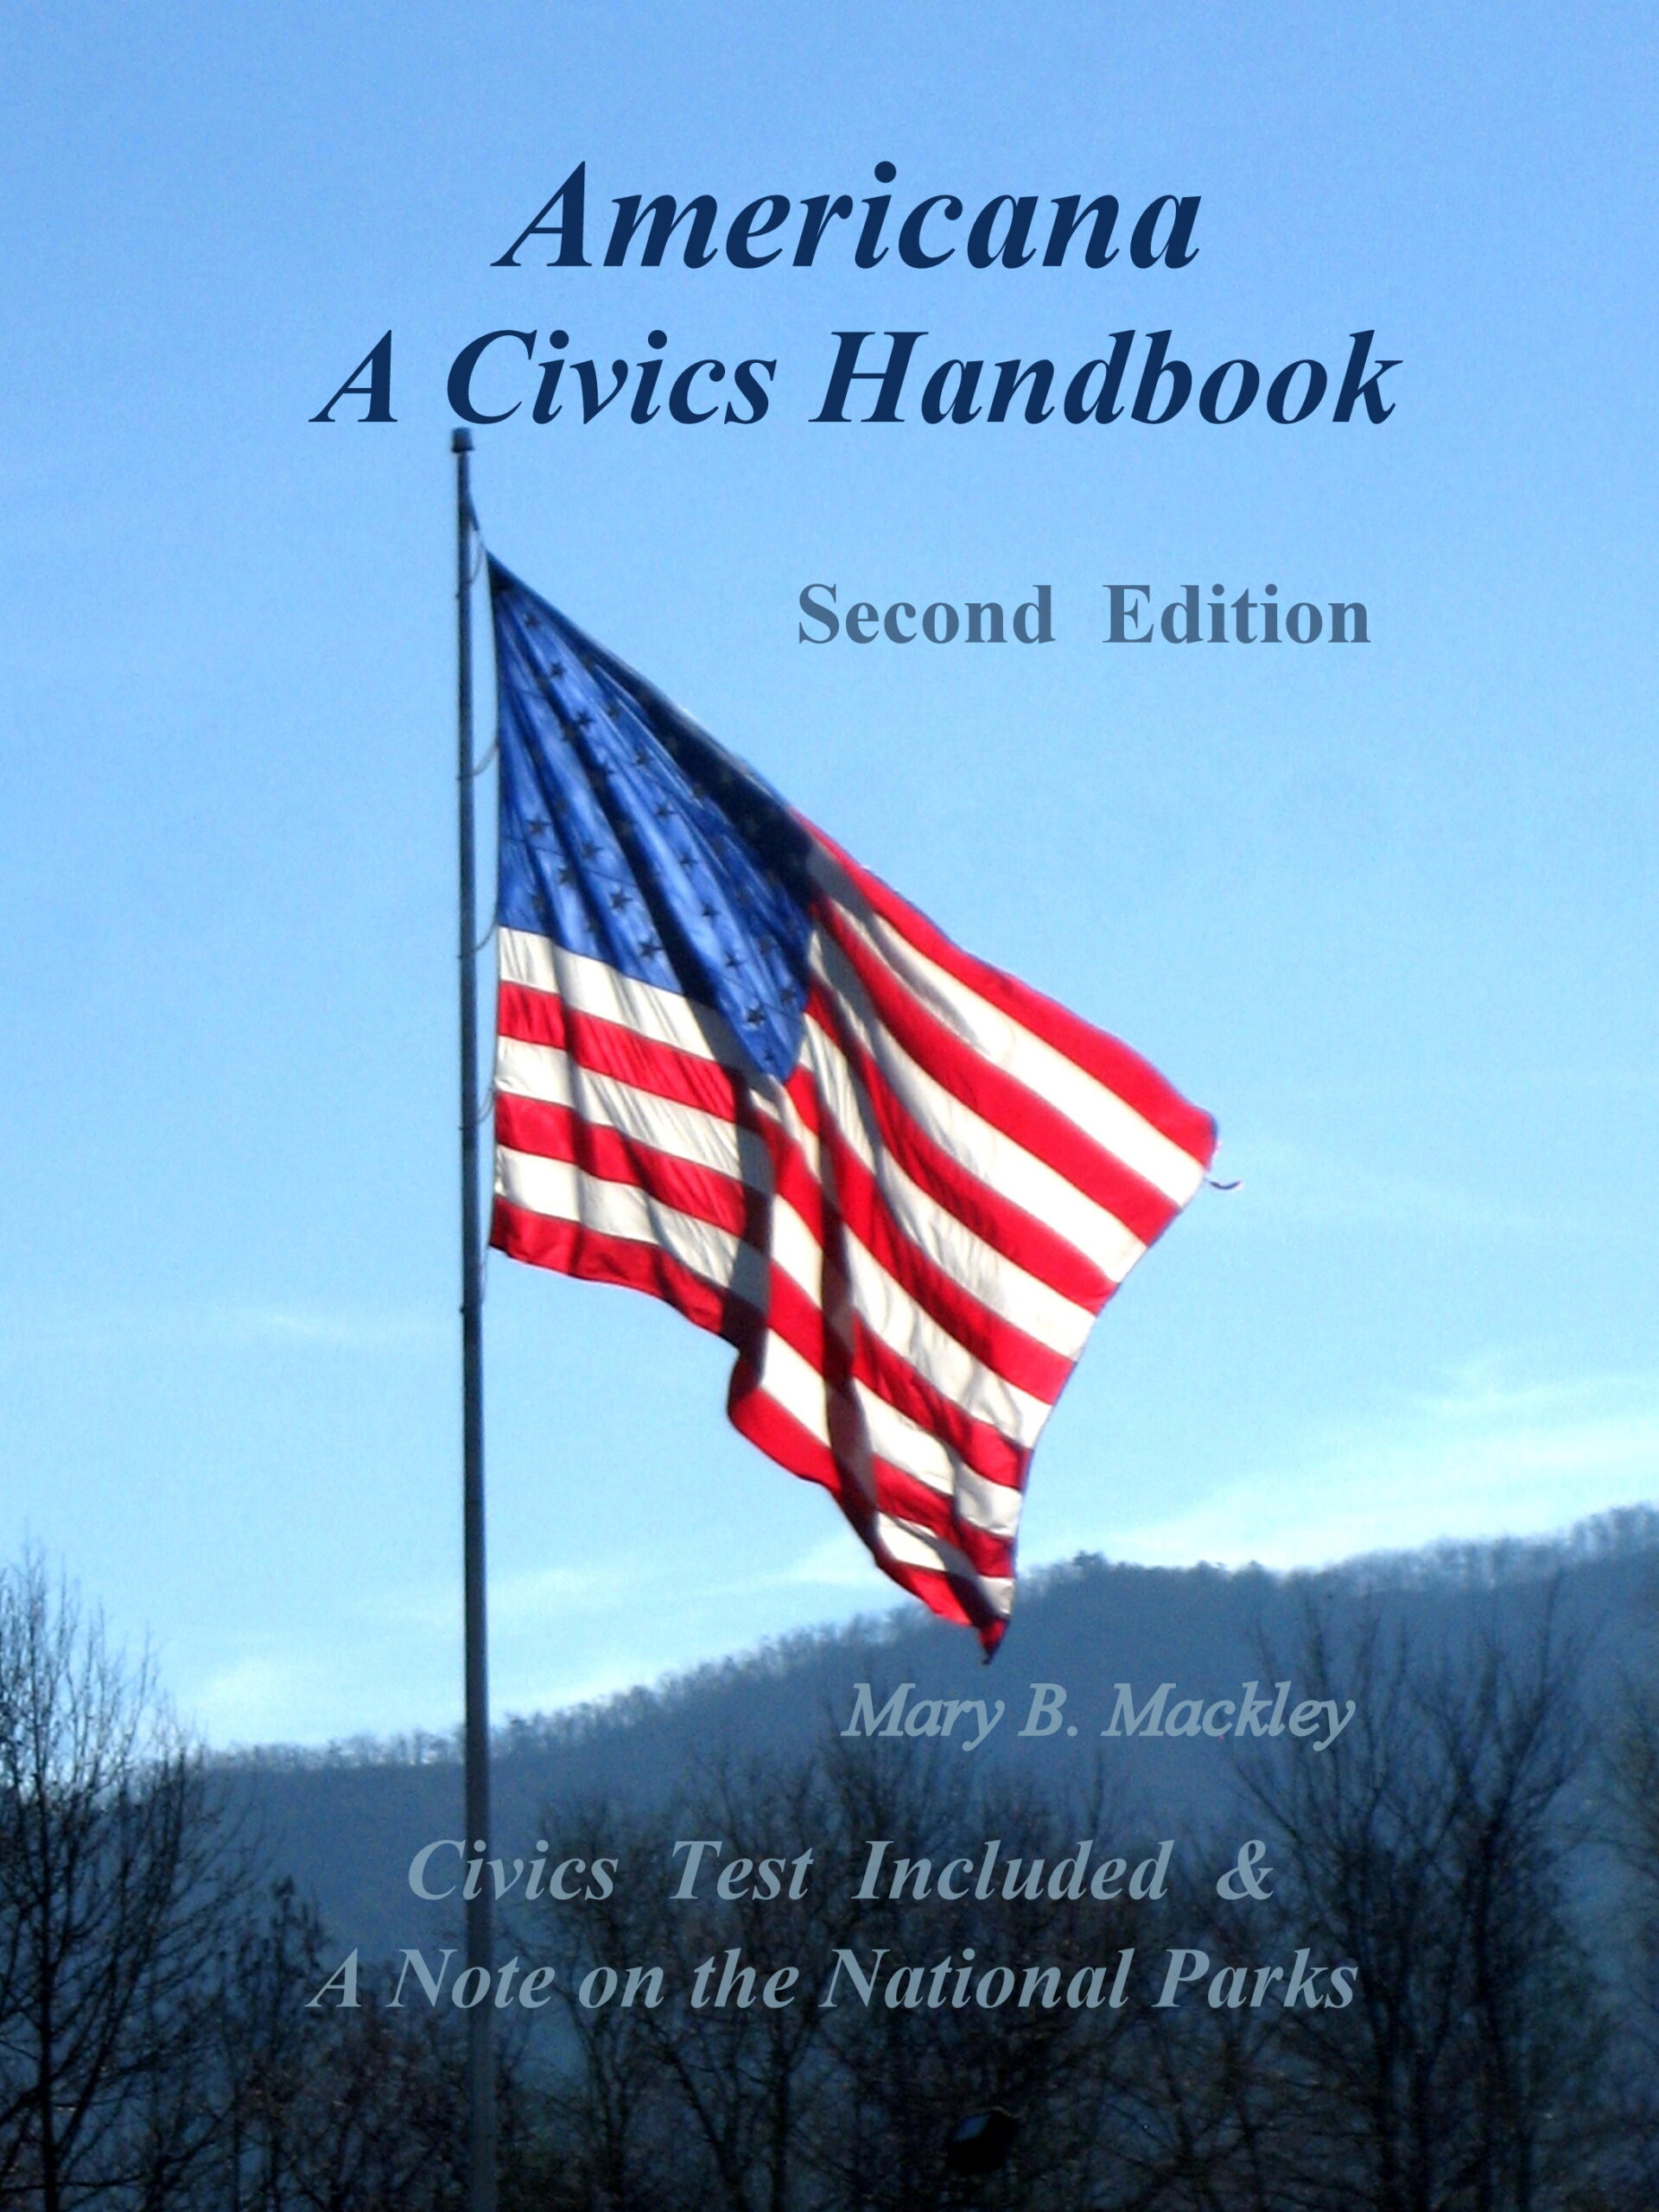 FREE: Americana A Civics Handbook Second Edition by Mary B. Mackley